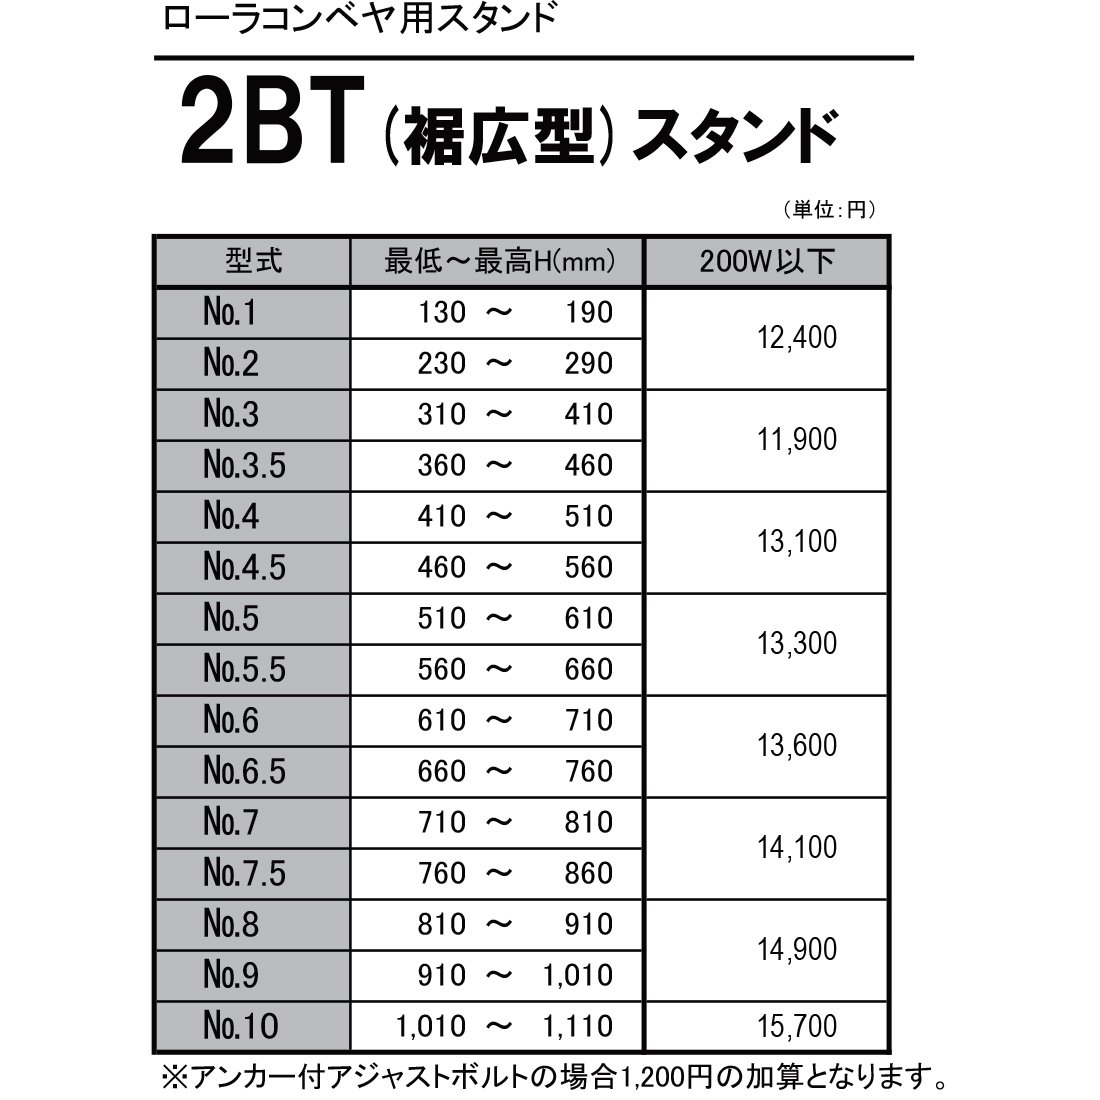 2BT(裾広型)スタンド　ローラコンベヤ用スタンド(Mシリーズ用）　価格表